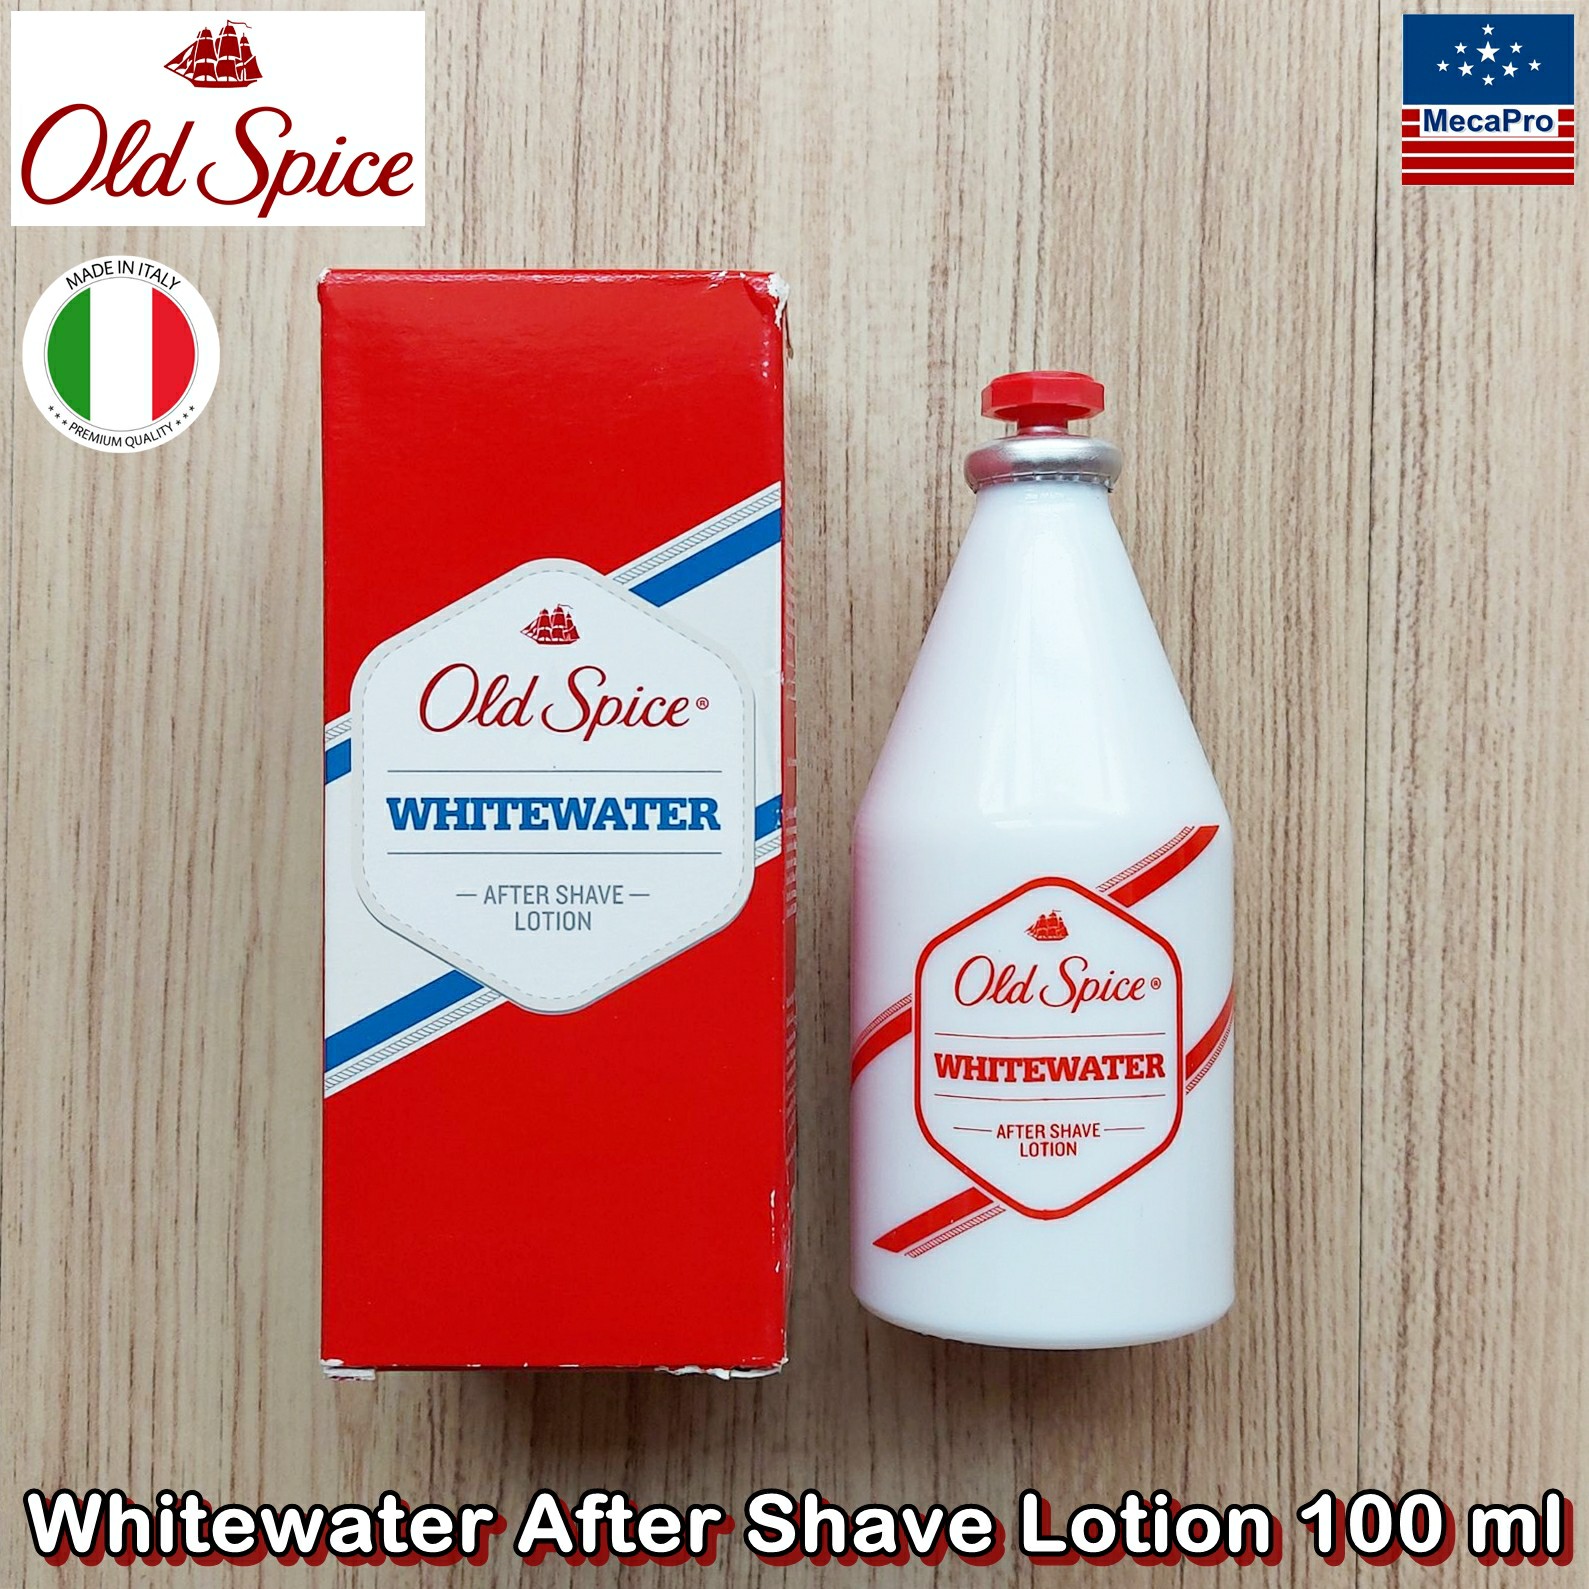 Old Spice® Whitewater After Shave Lotion 100 ml โอลด์ สไปซ์ ผลิตภัณฑ์บำรุงผิวหน้า หลังการโกนหนวด